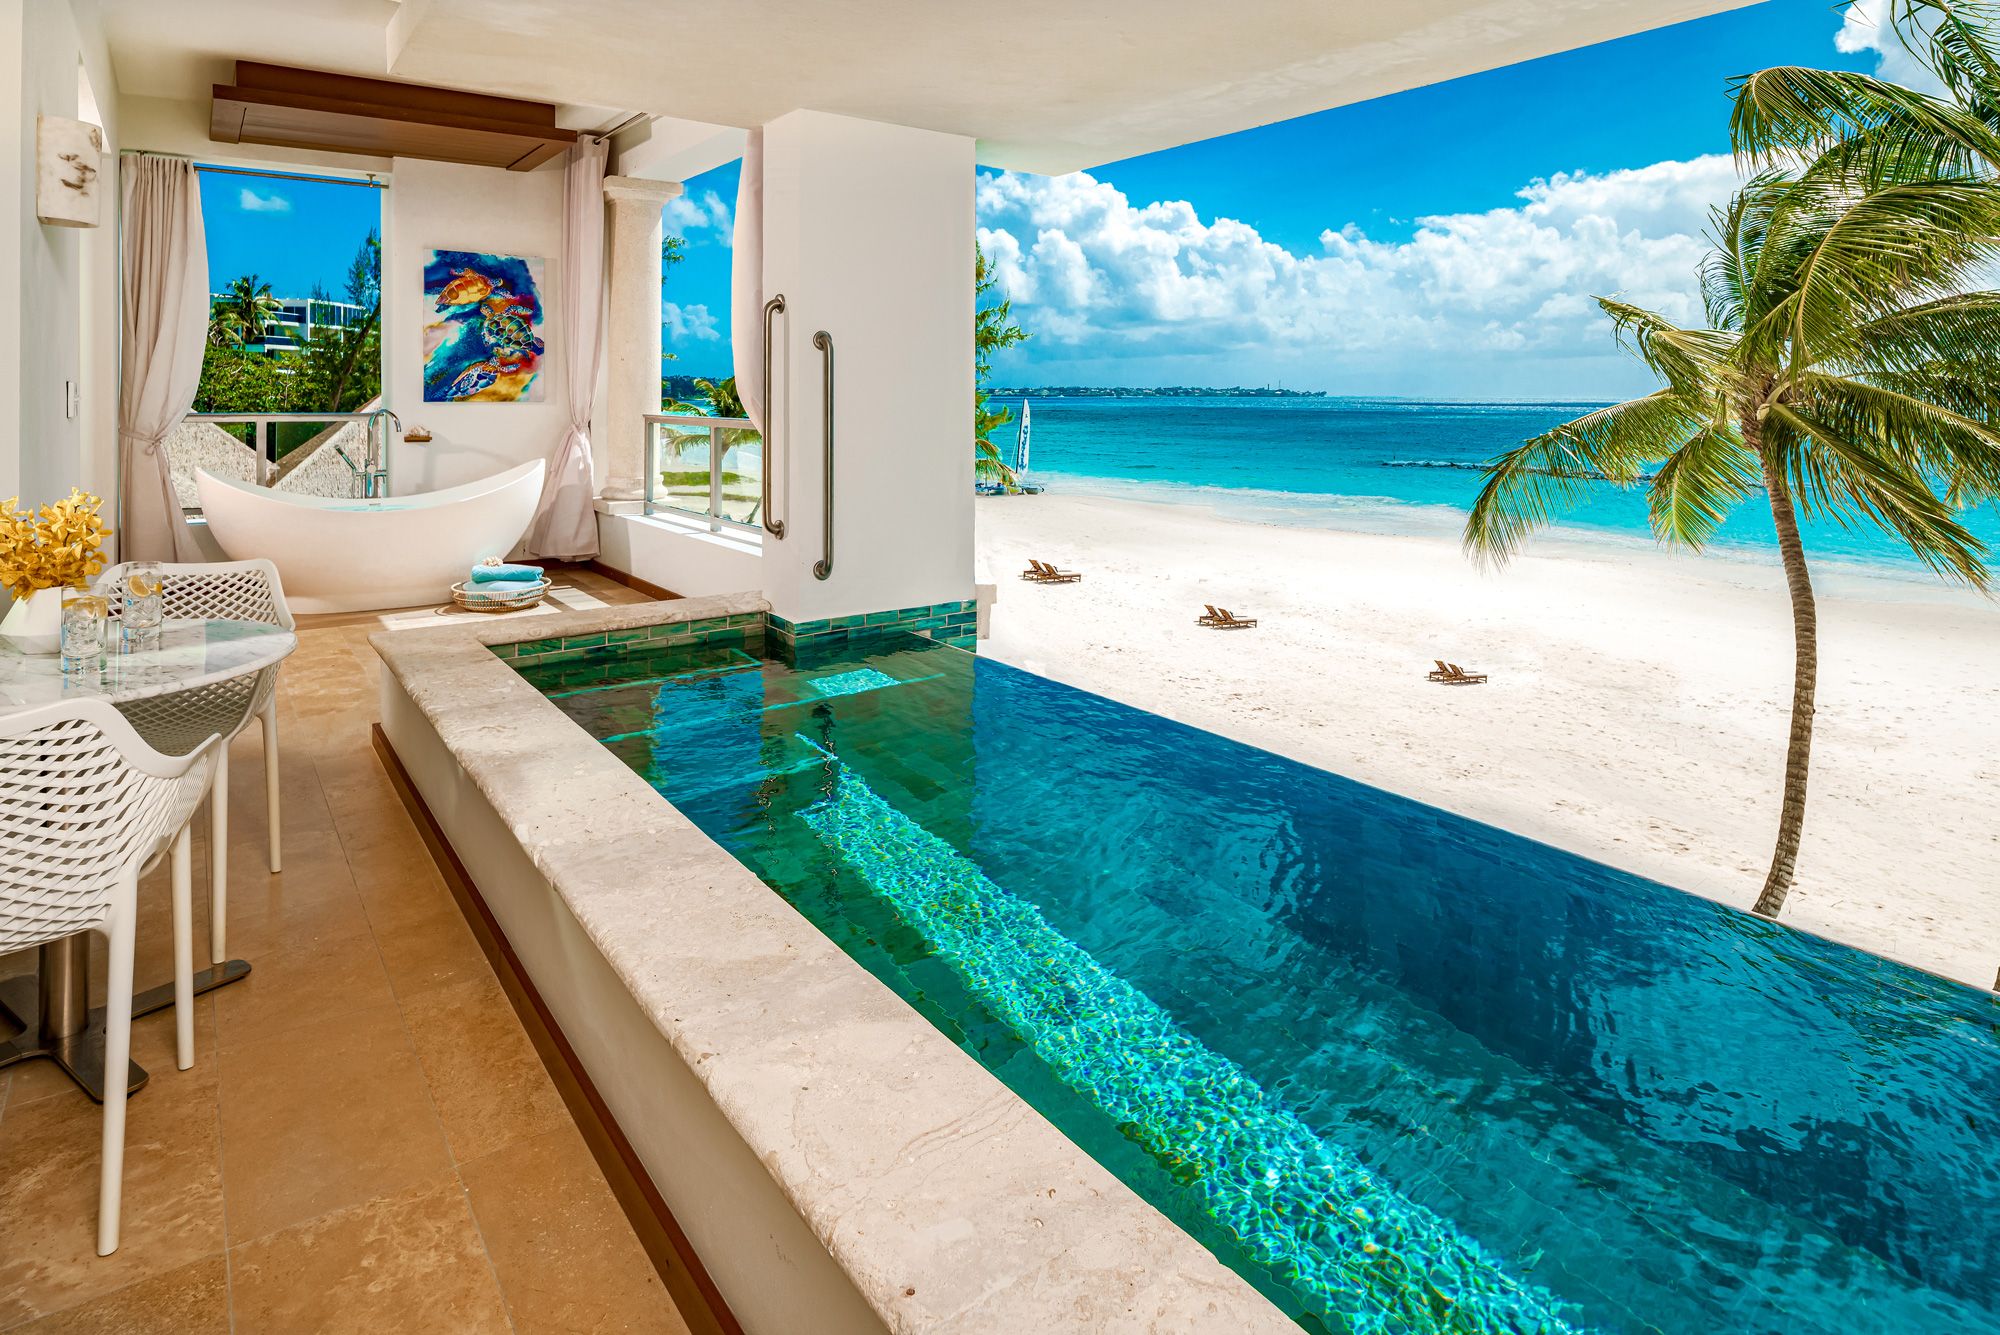 Sandals-Royal-Barbados-Beachfront-SkyPool-Butler-Suite-Pool